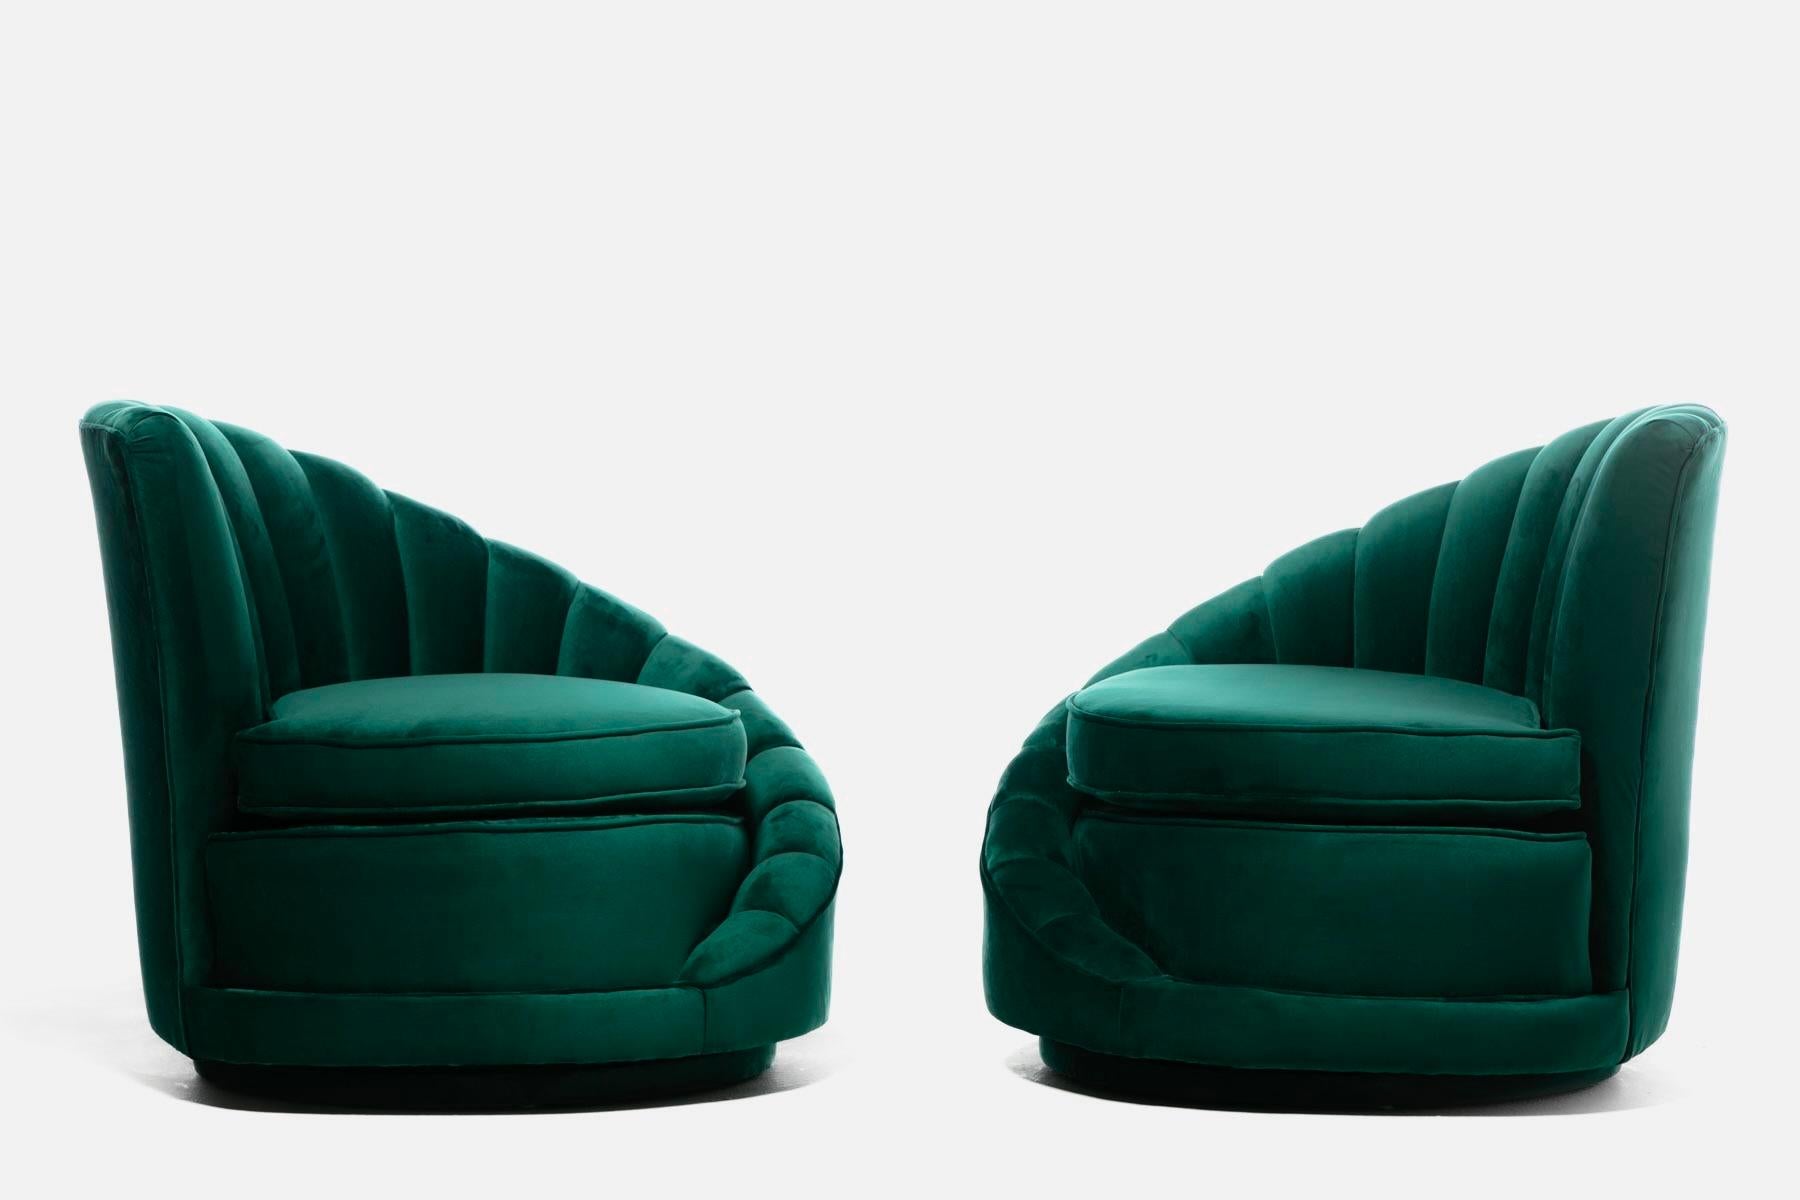 American Hollywood Regency Glamorous Asymmetrical Swivel Chairs in Emerald Green Velvet For Sale